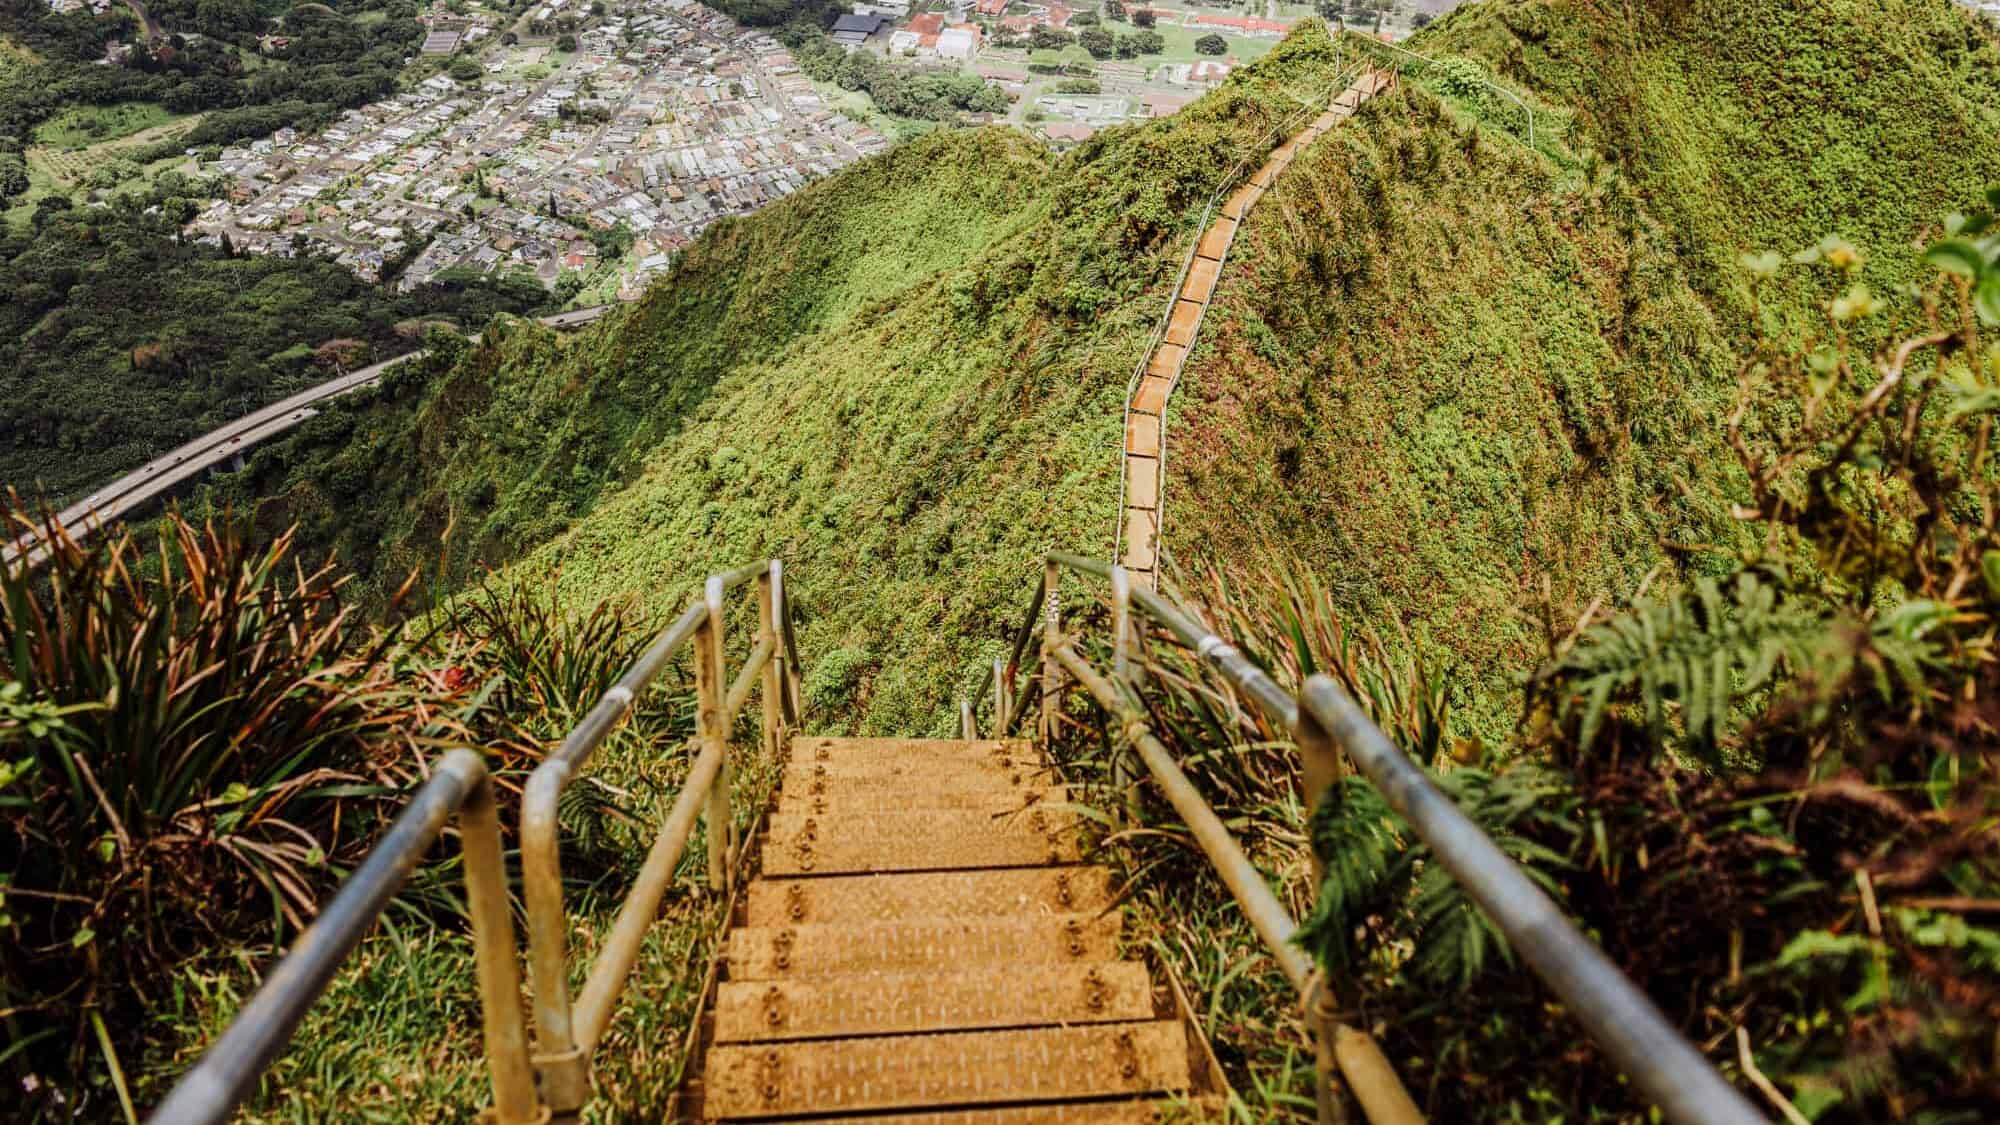 stairway to heaven hawaii